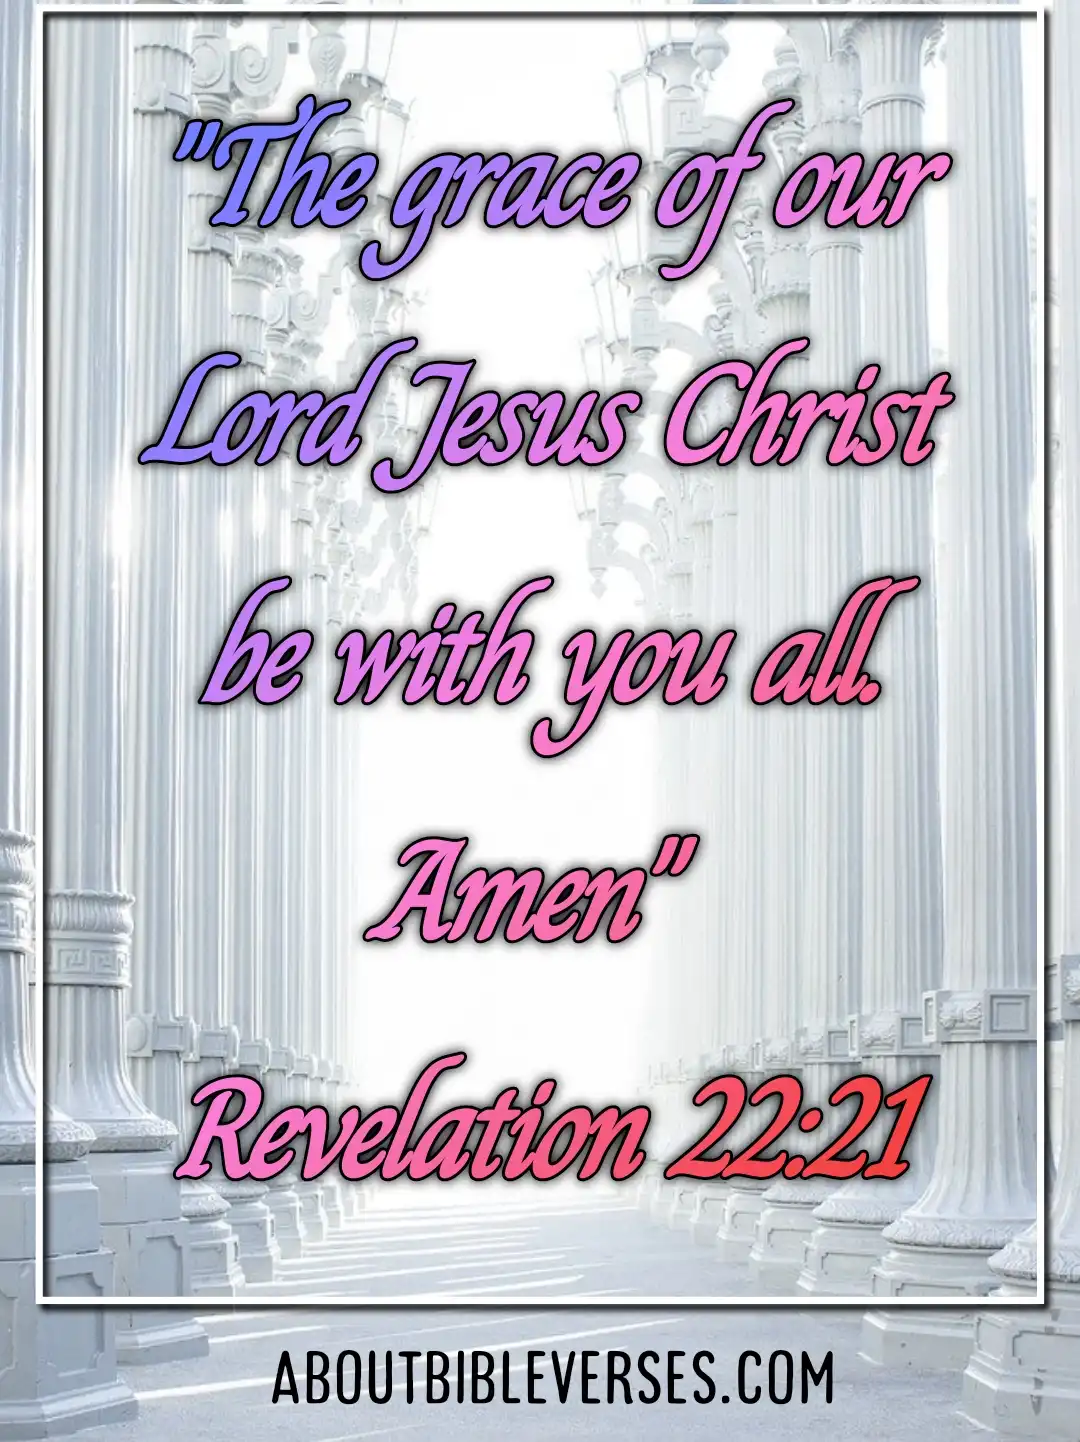 Today's bible verse (Revelation 22:21)